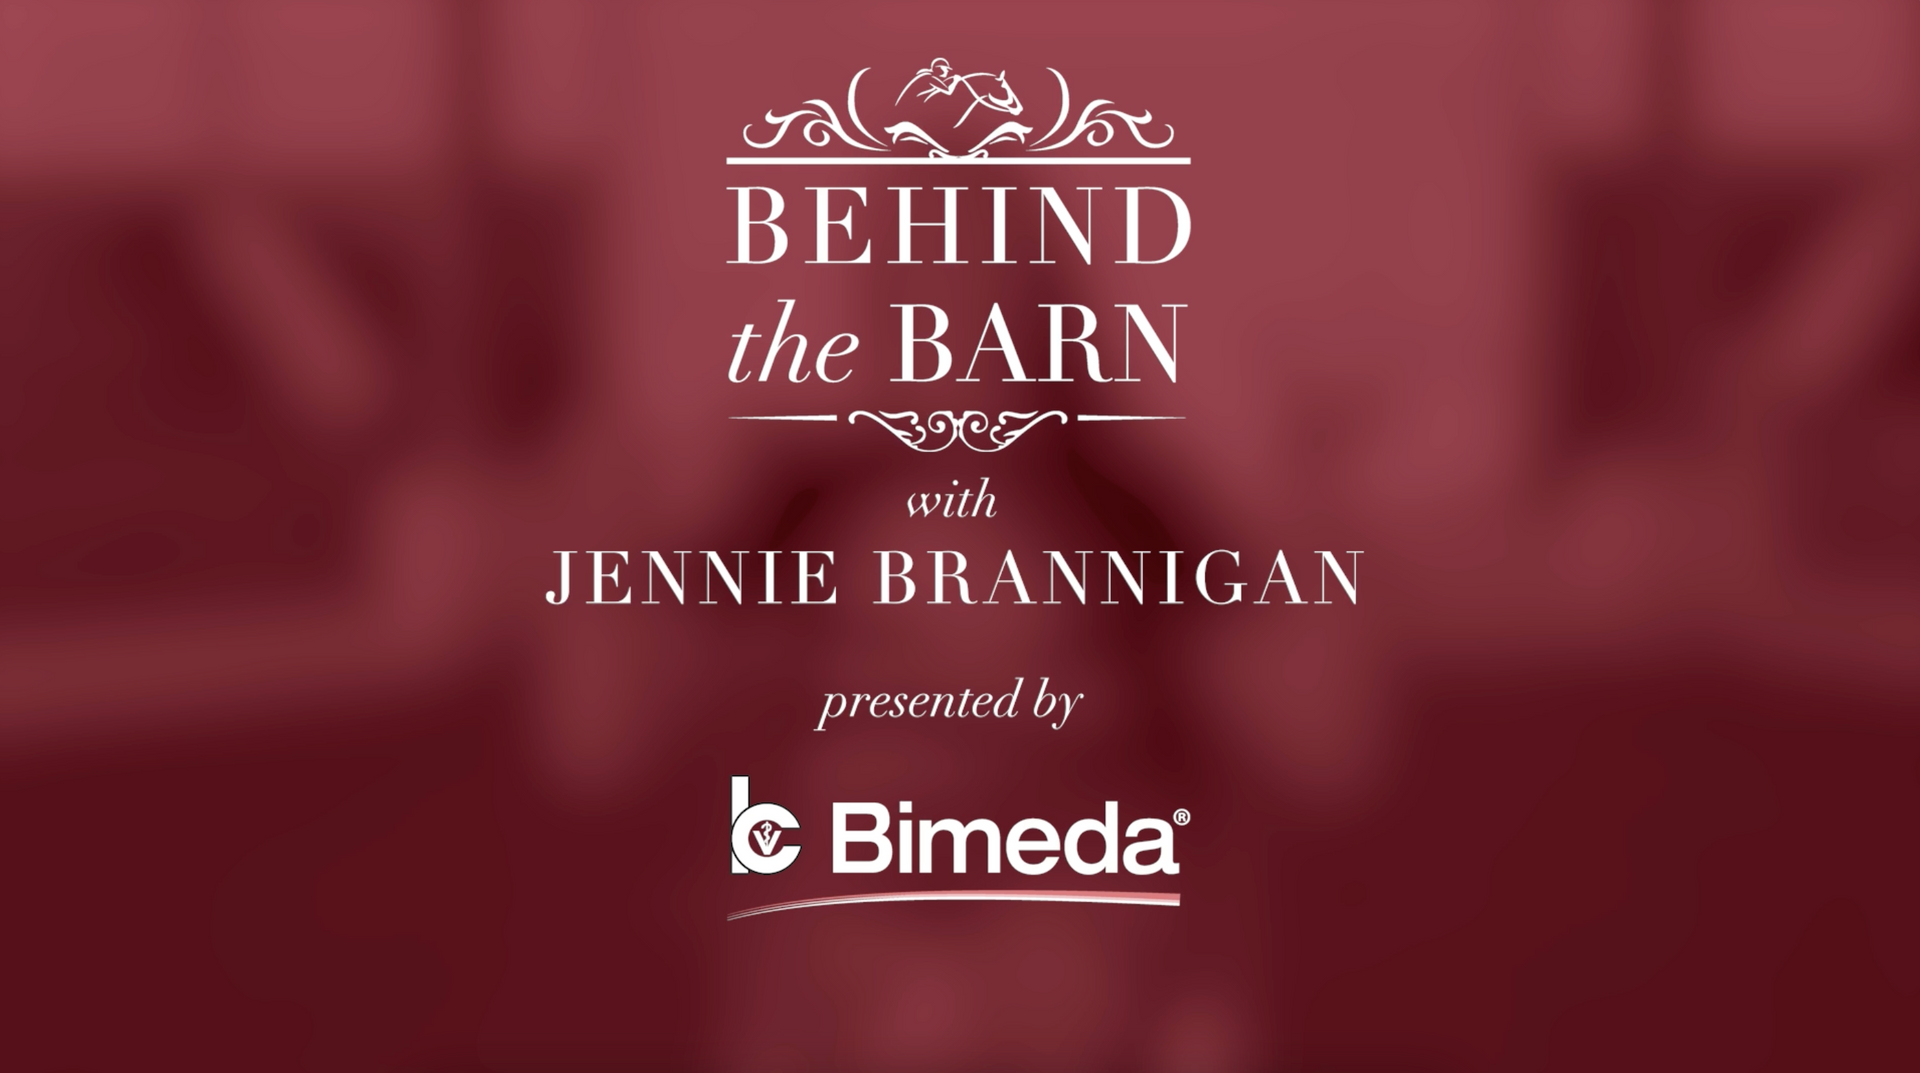 Behind the barn with jennie brannigan presented by bimeda